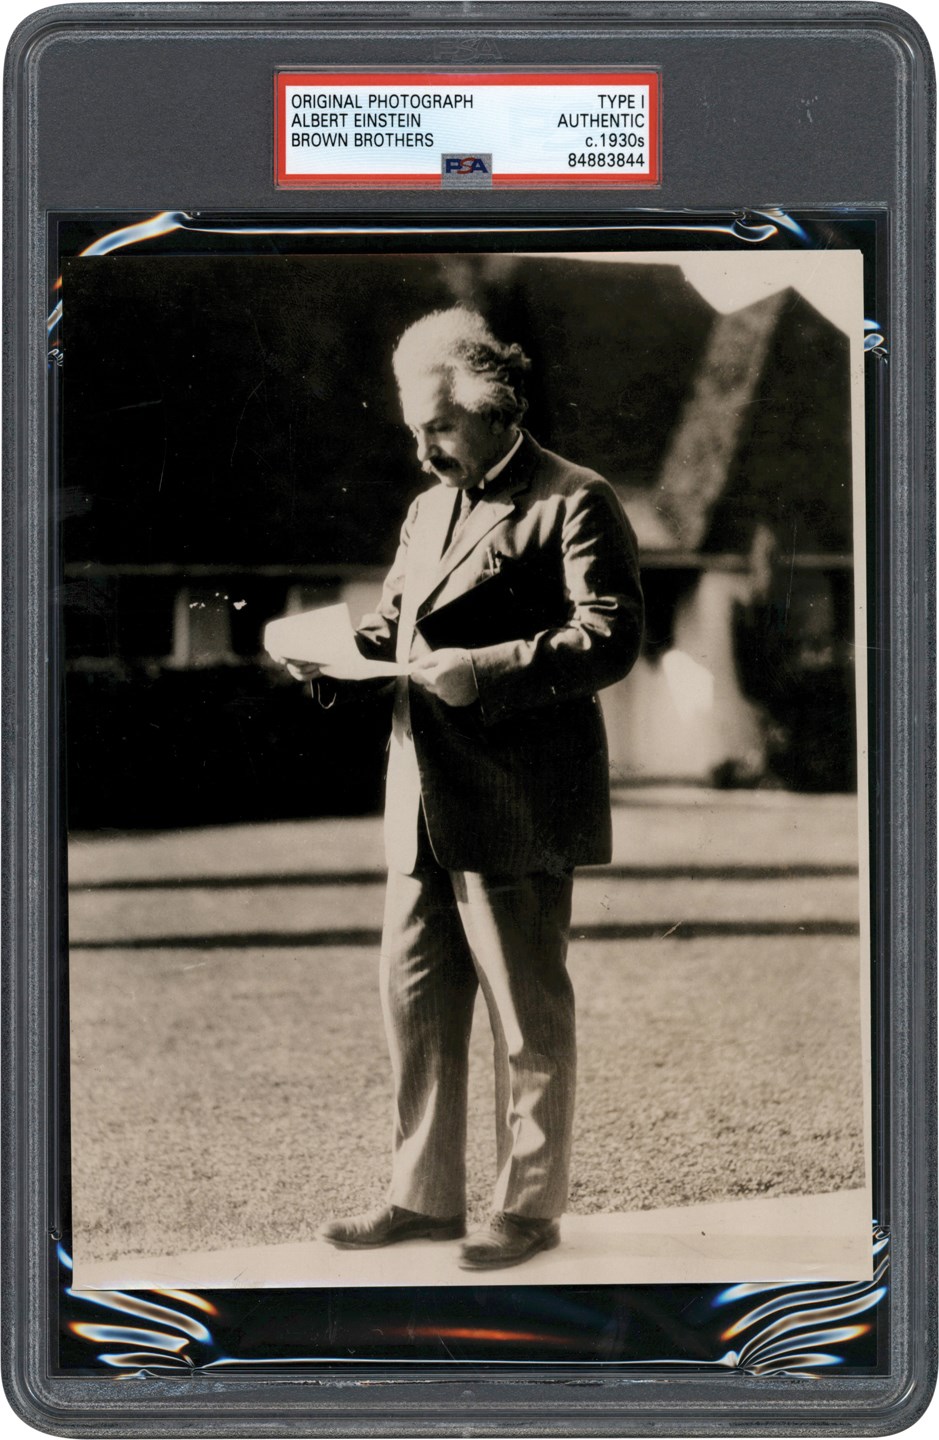 Vintage Sports Photographs - Circa 1930s Albert Einstein Photograph (PSA Type I)